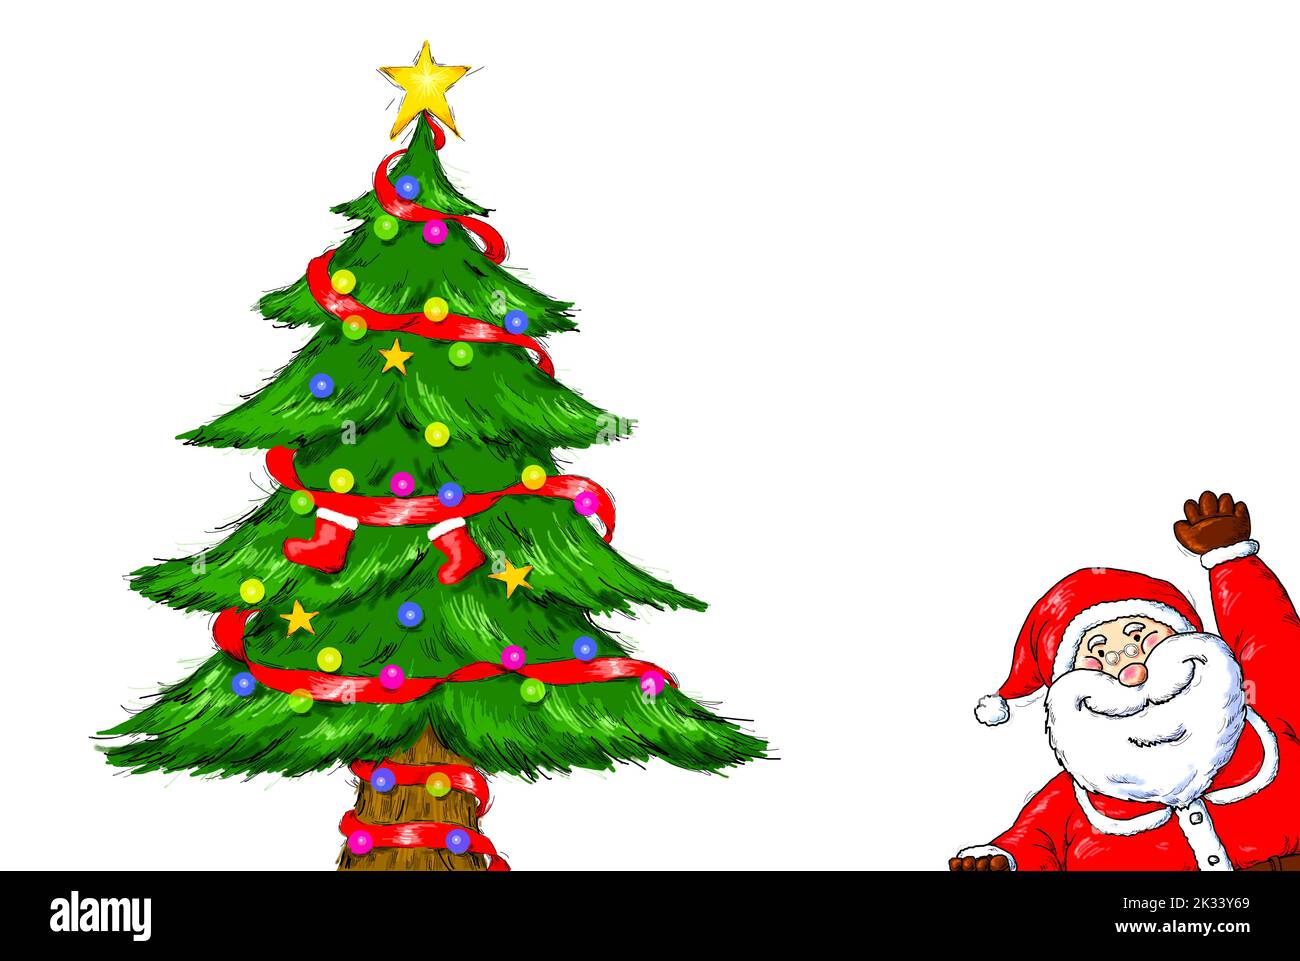 Digital drawing illustration of Merry Christmas. Stock Photo